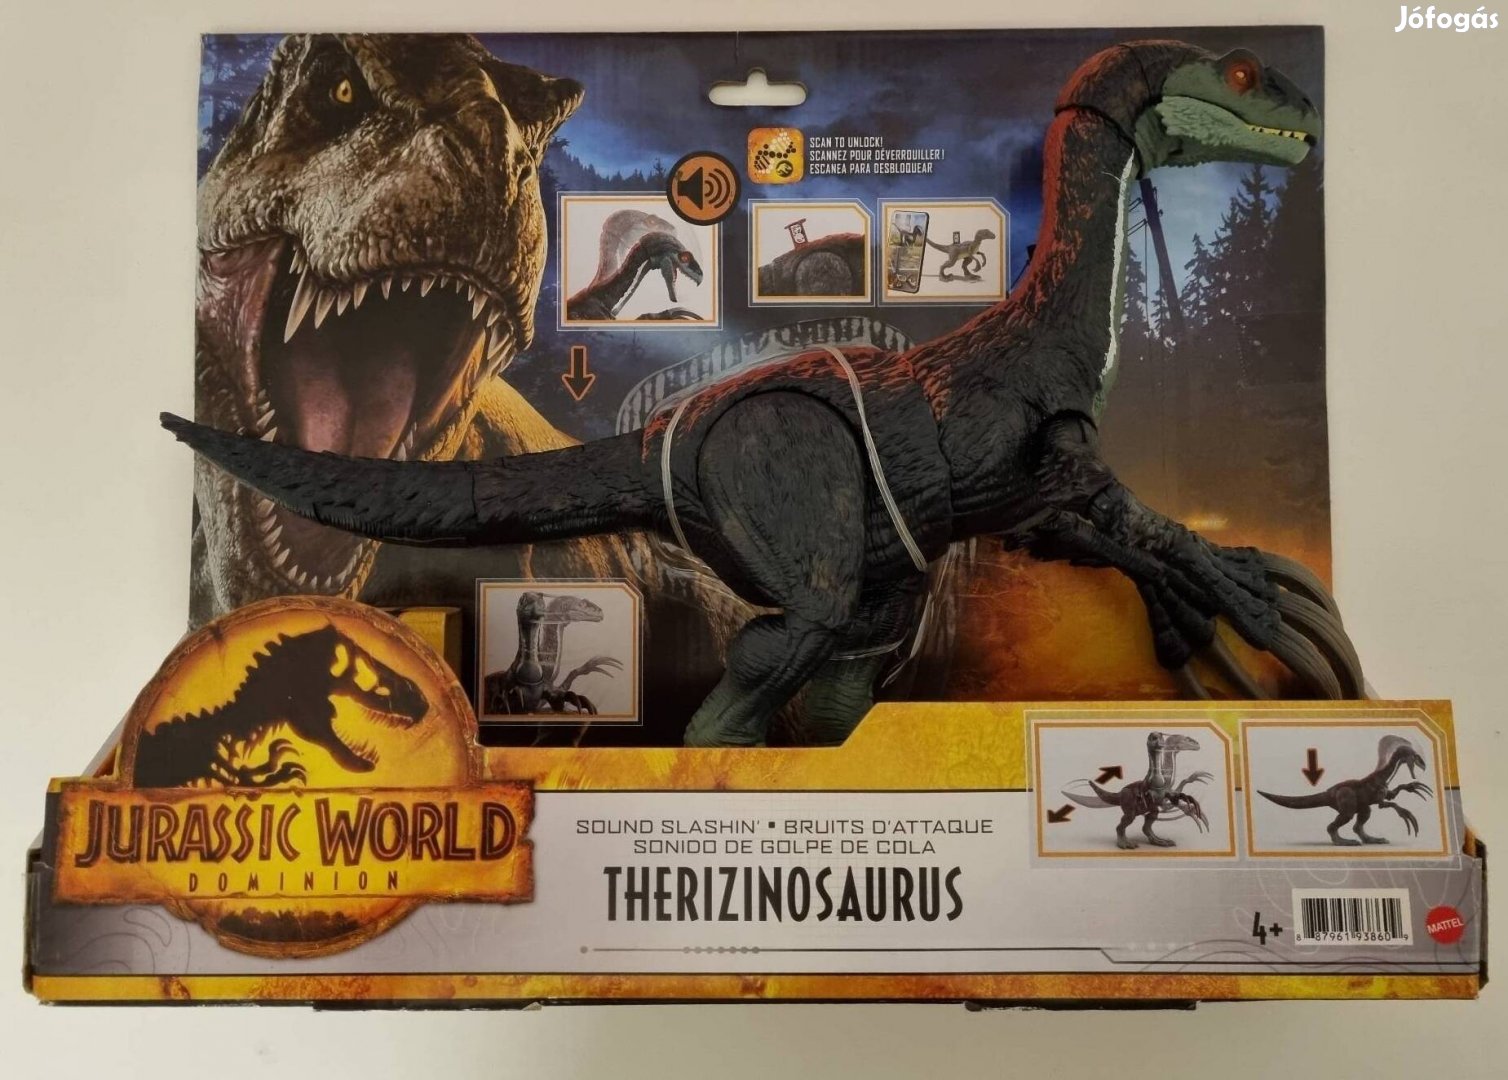 Jurassic World - Therizinosaurus "Sound Slashin"